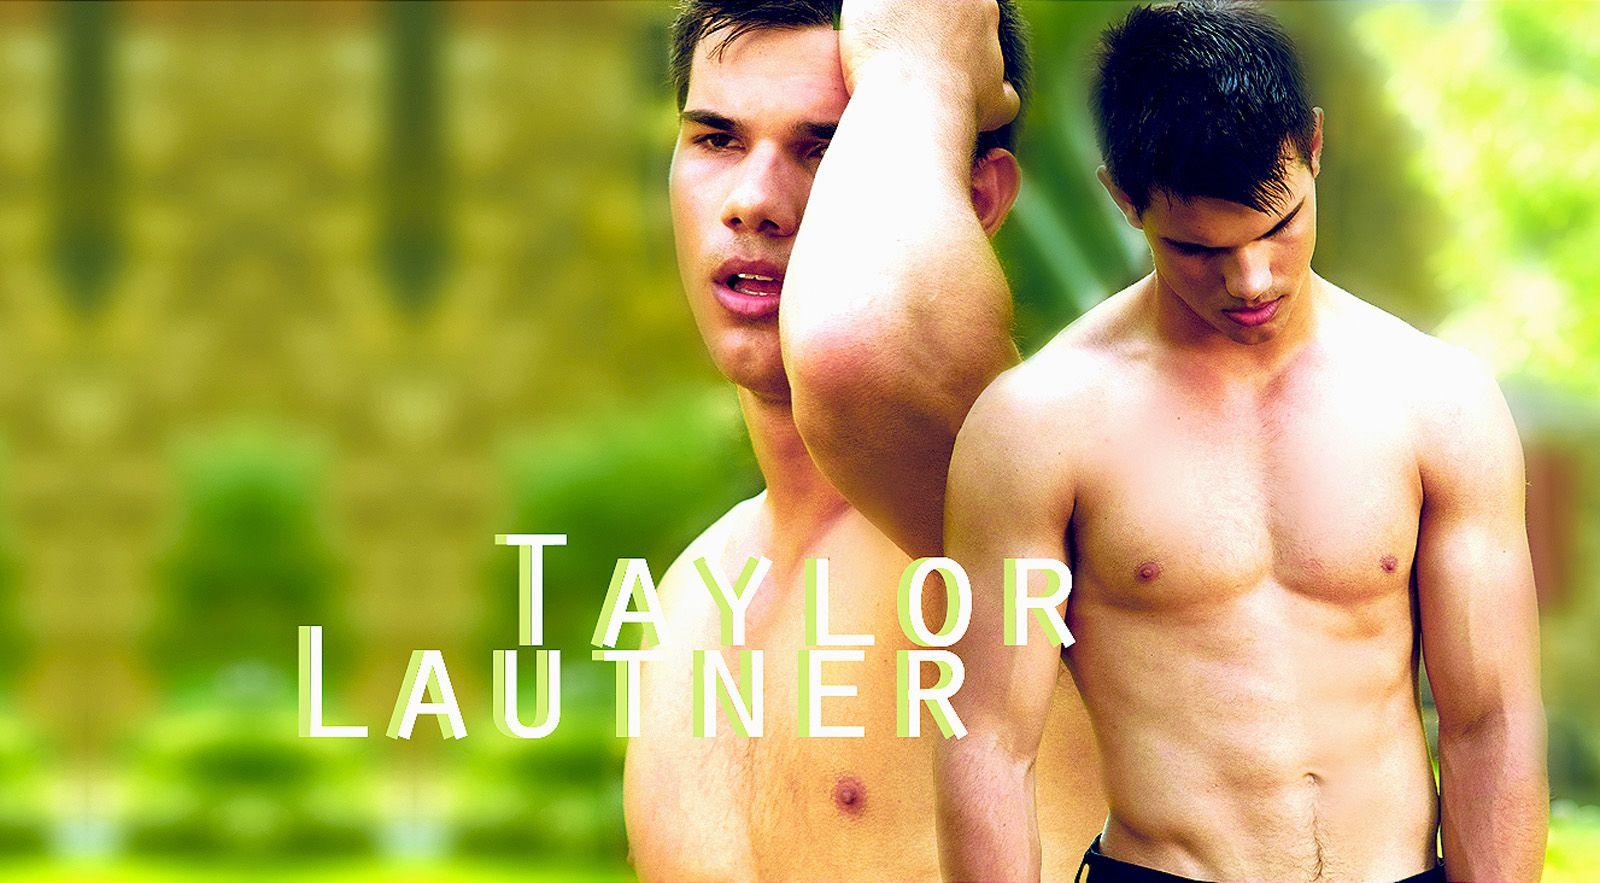 Wallpaper Of Taylor Lautner Naked Taylor Lautner Shirtless Wallpaper